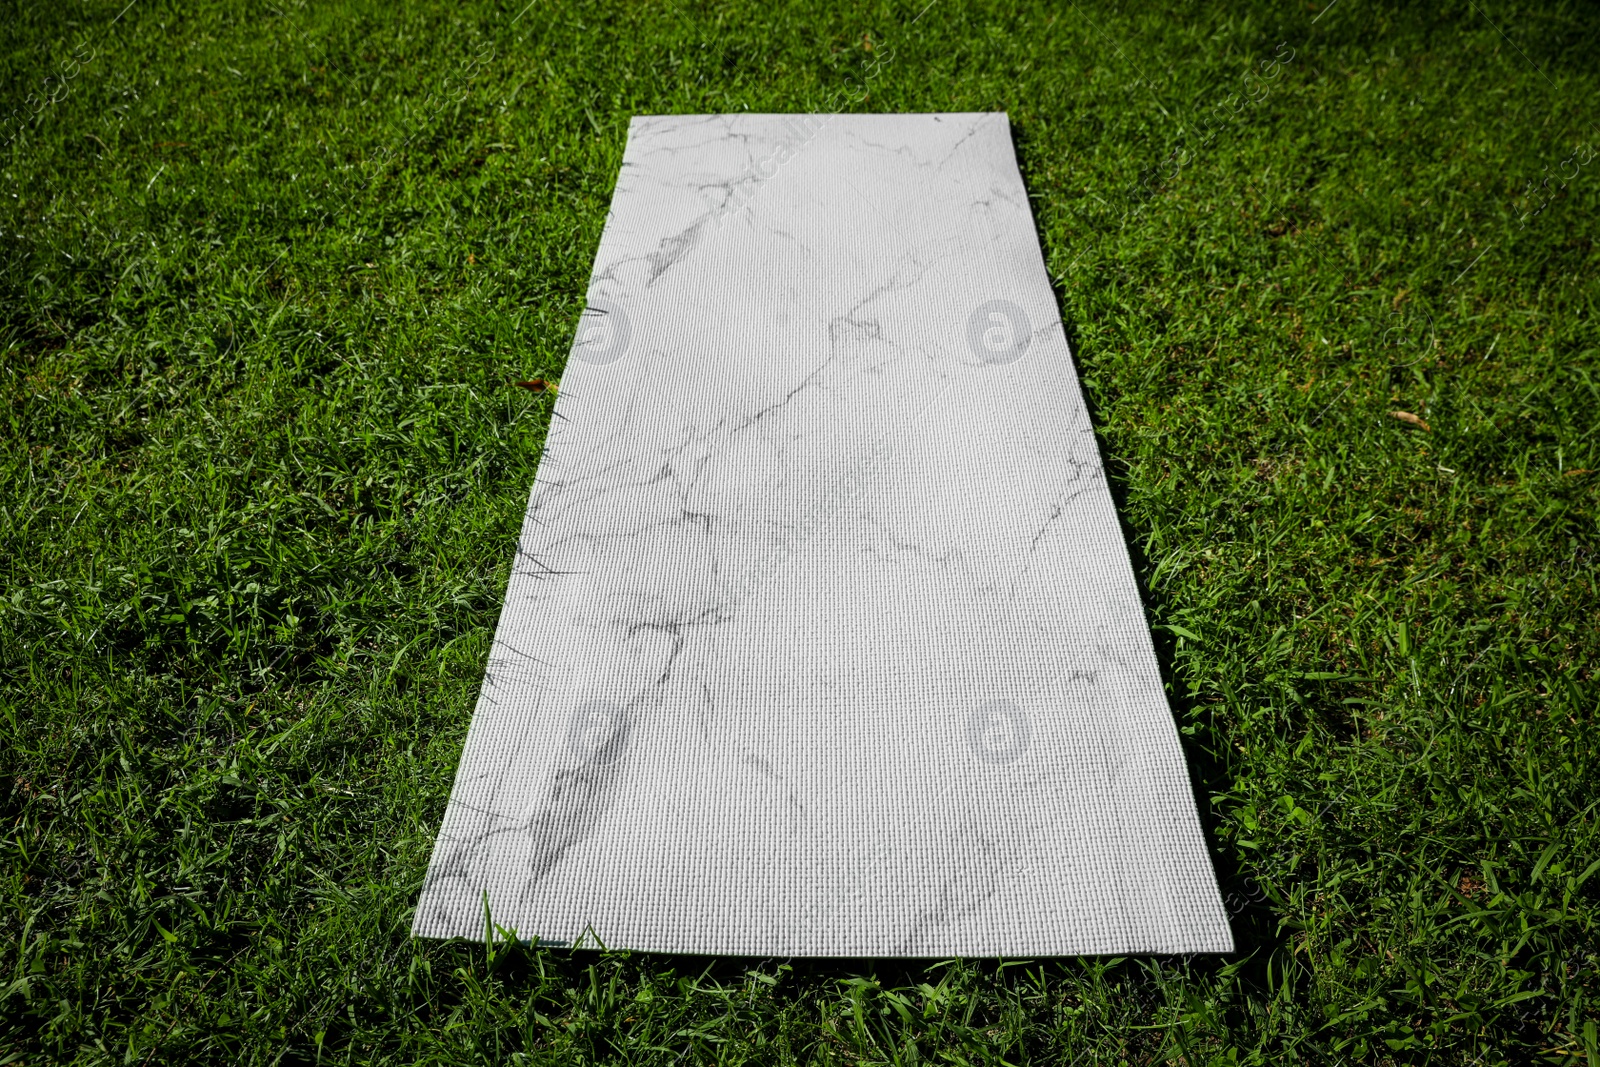 Photo of Karemat or fitness mat on green grass outdoors